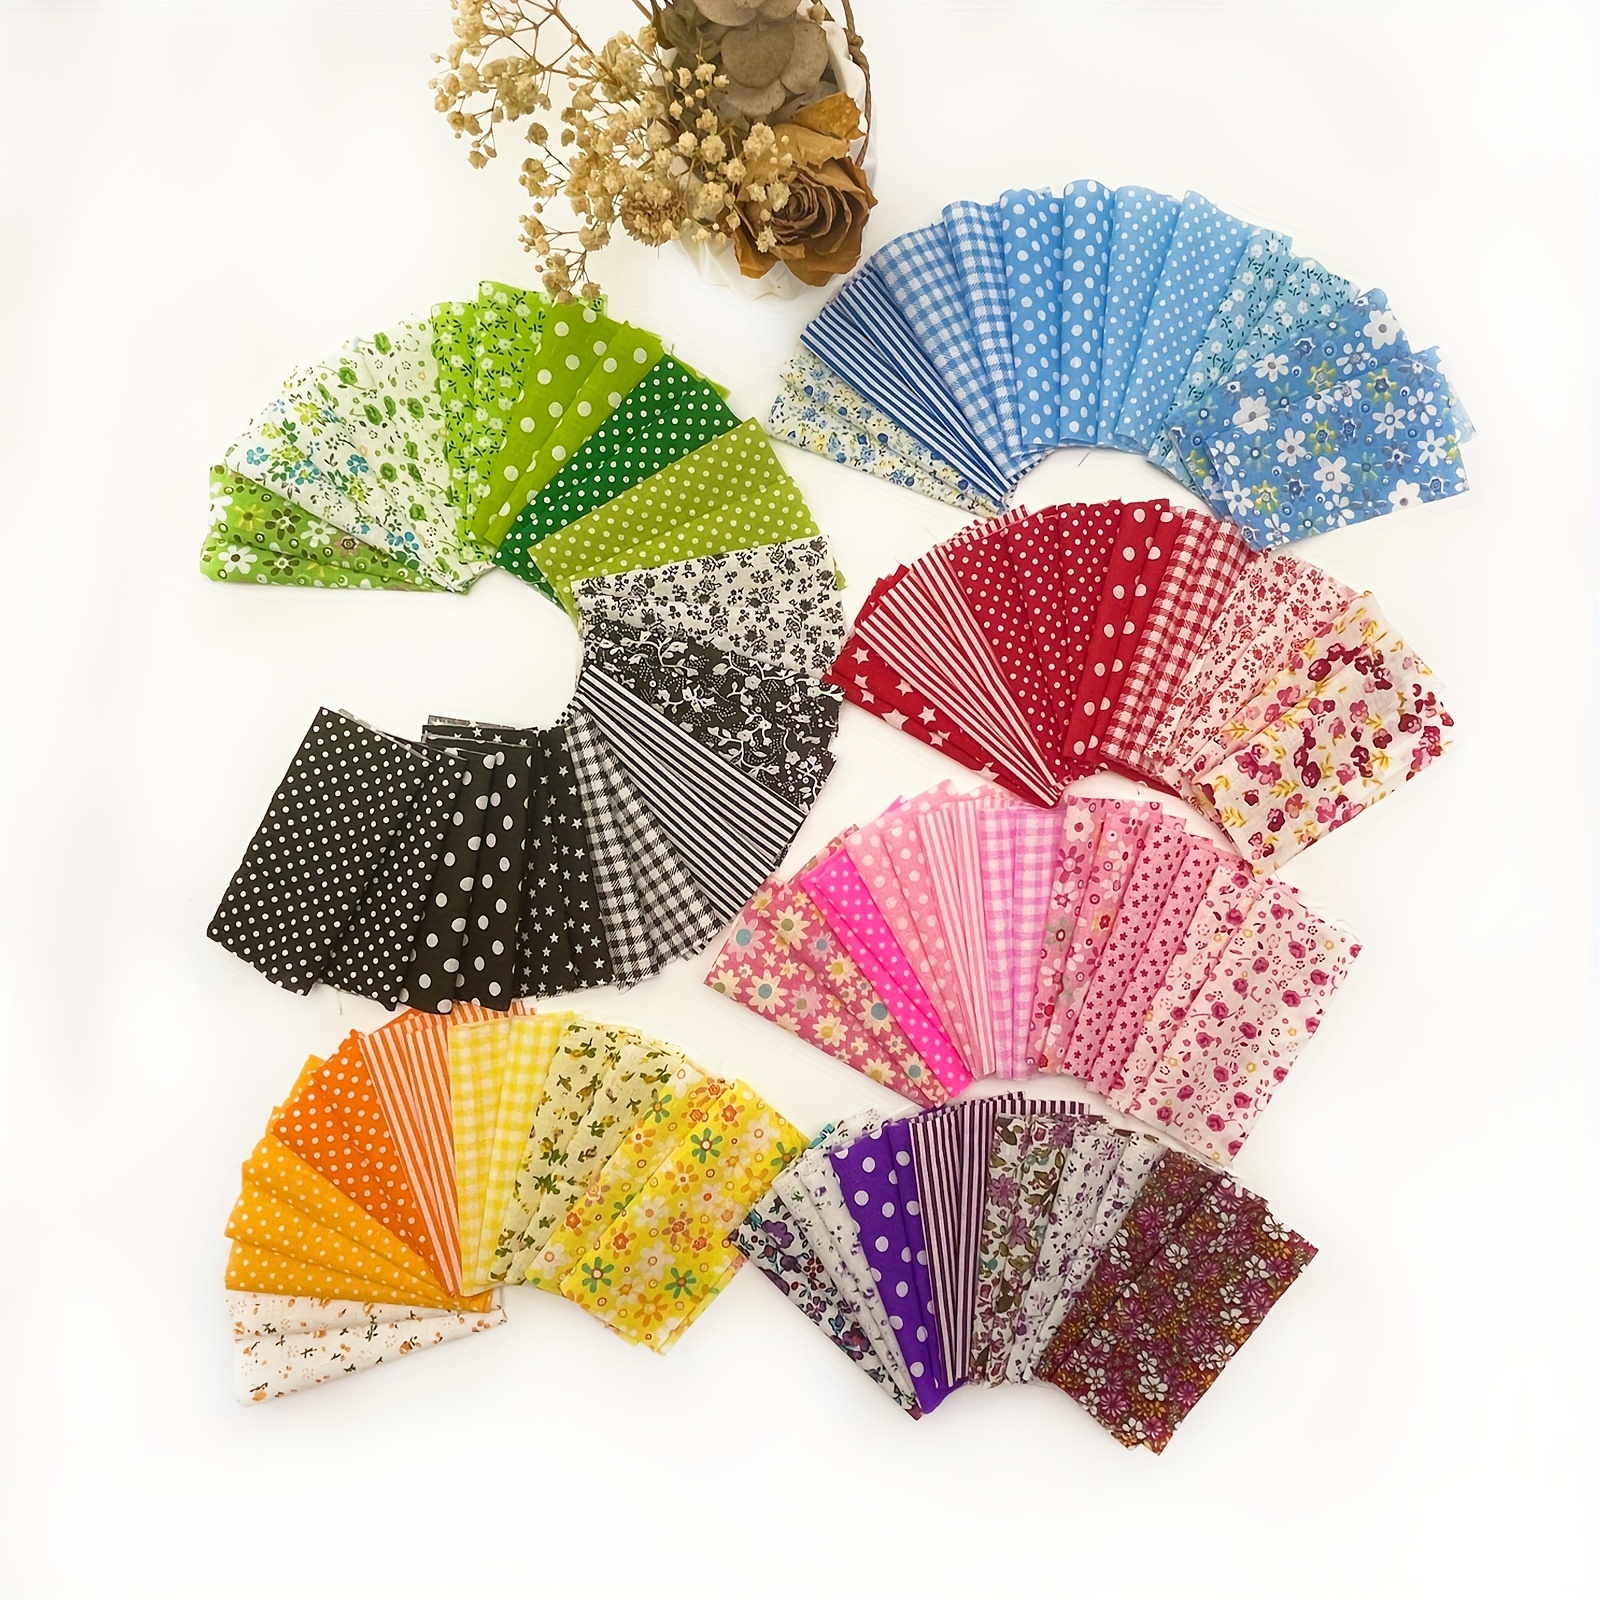 Cotton Quilting Fabric Misscrafts 50pcs 8 x 8 (20cm x 20cm) Craft  Supplies Top Fat Quarter Bundles Floral Precut Fabric Square for DIY Craft